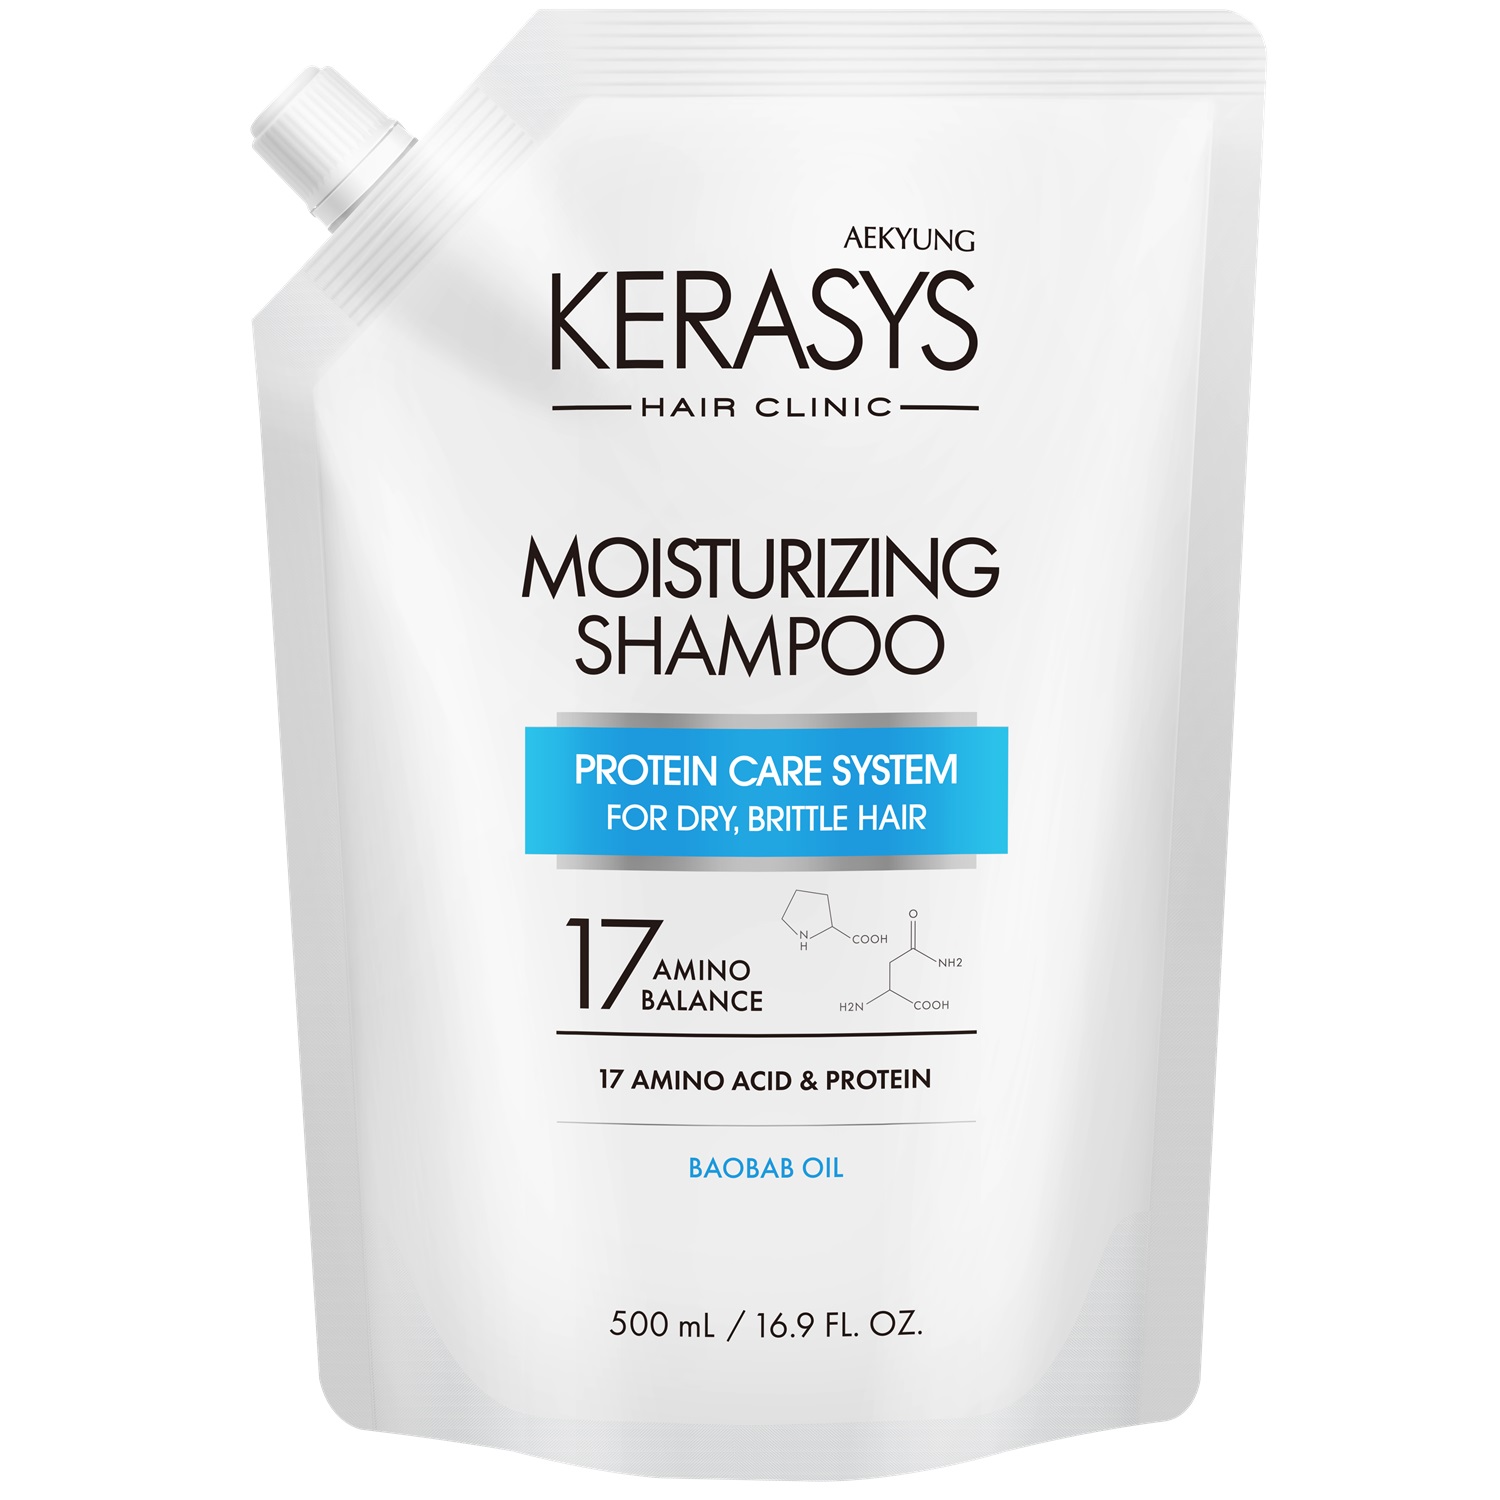 Kerasys Шампунь для волос увлажняющий, запасной блок 500 мл (Kerasys, Hair Clinic) цена и фото